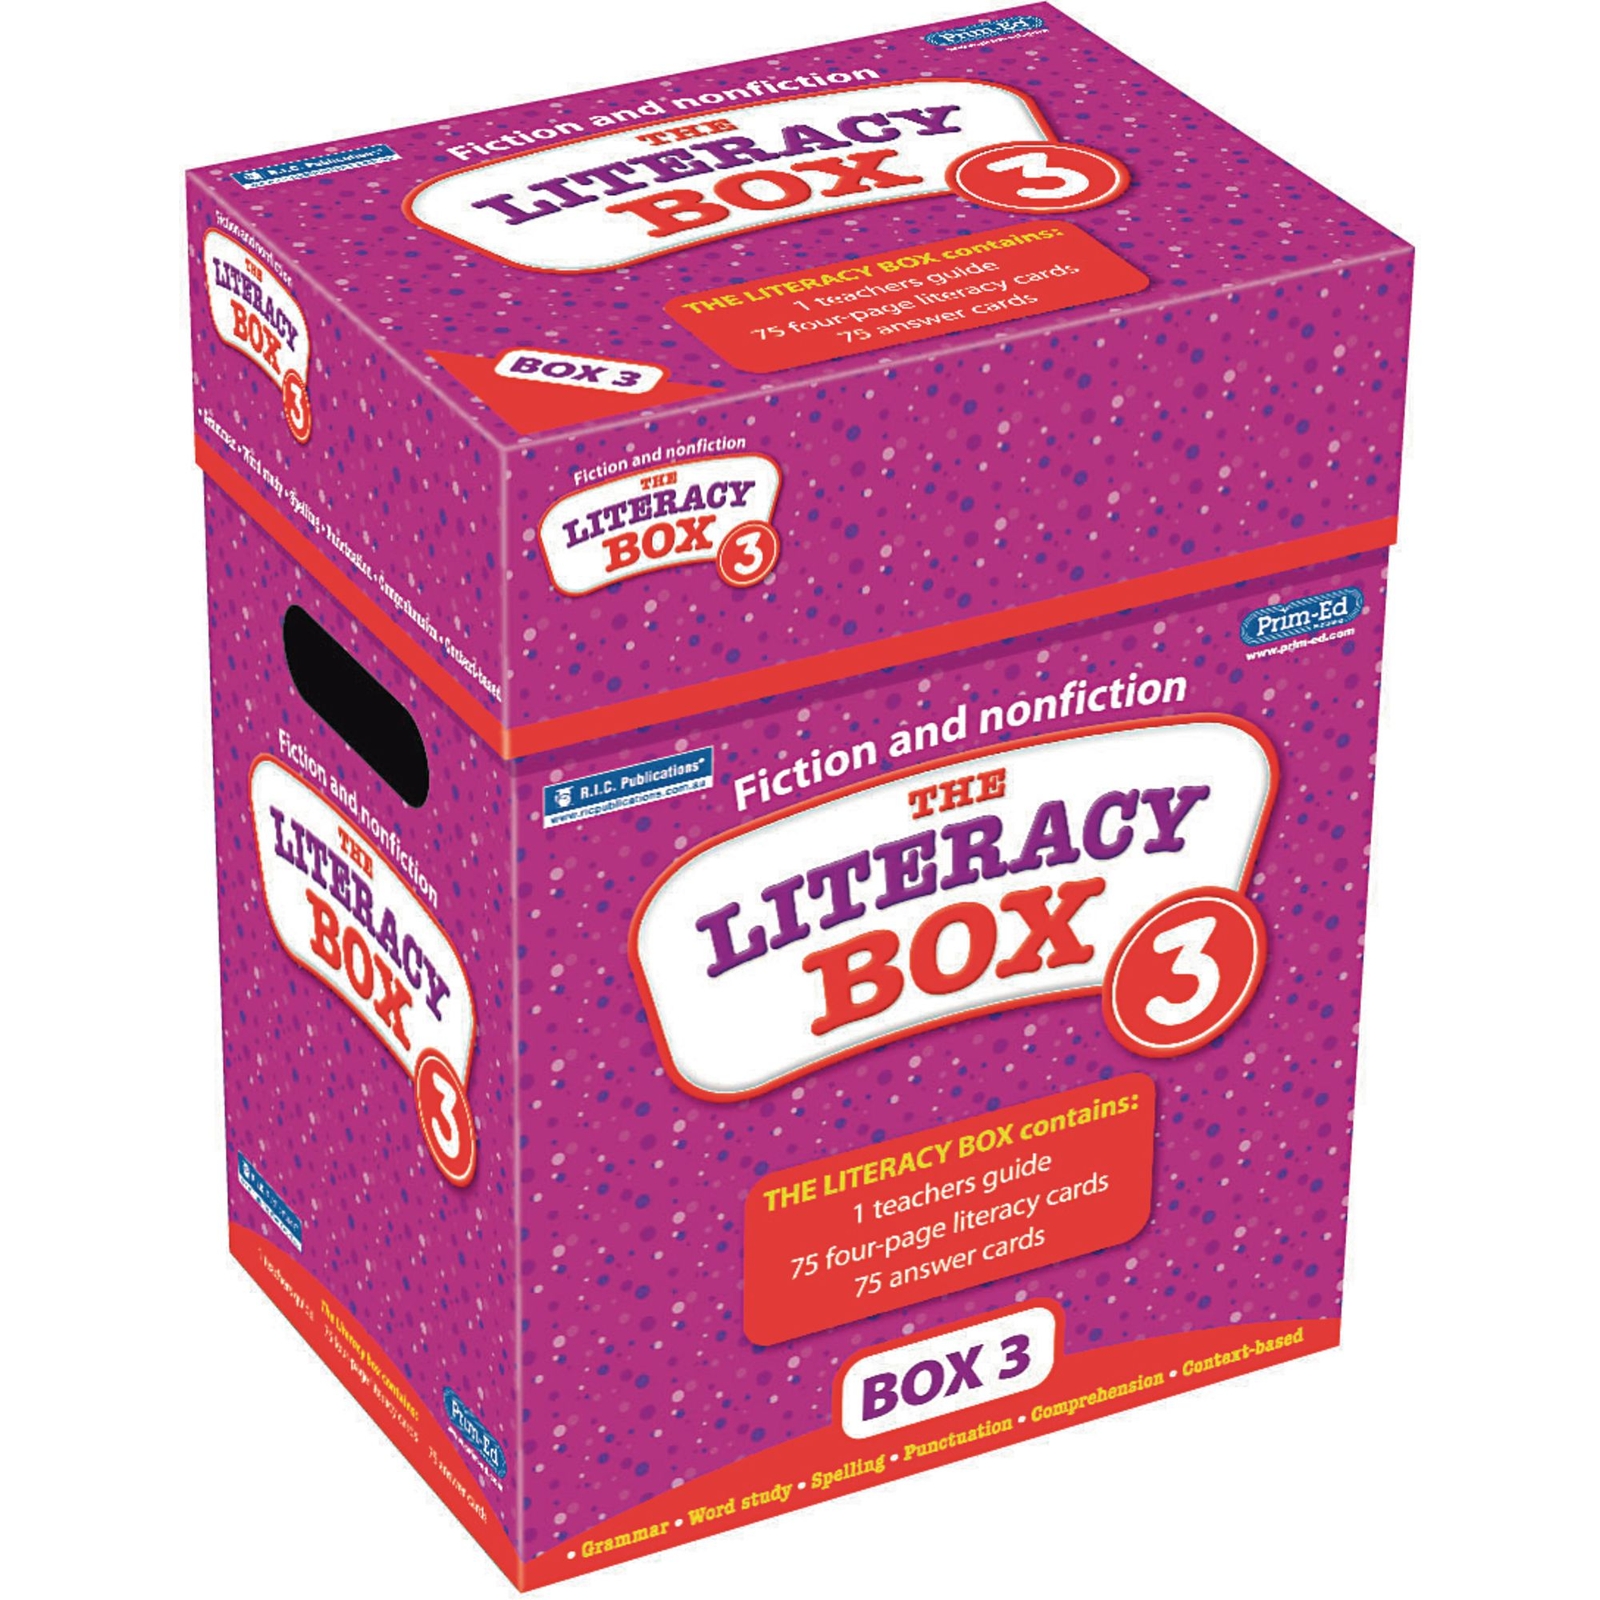 The Literacy Box Set 3